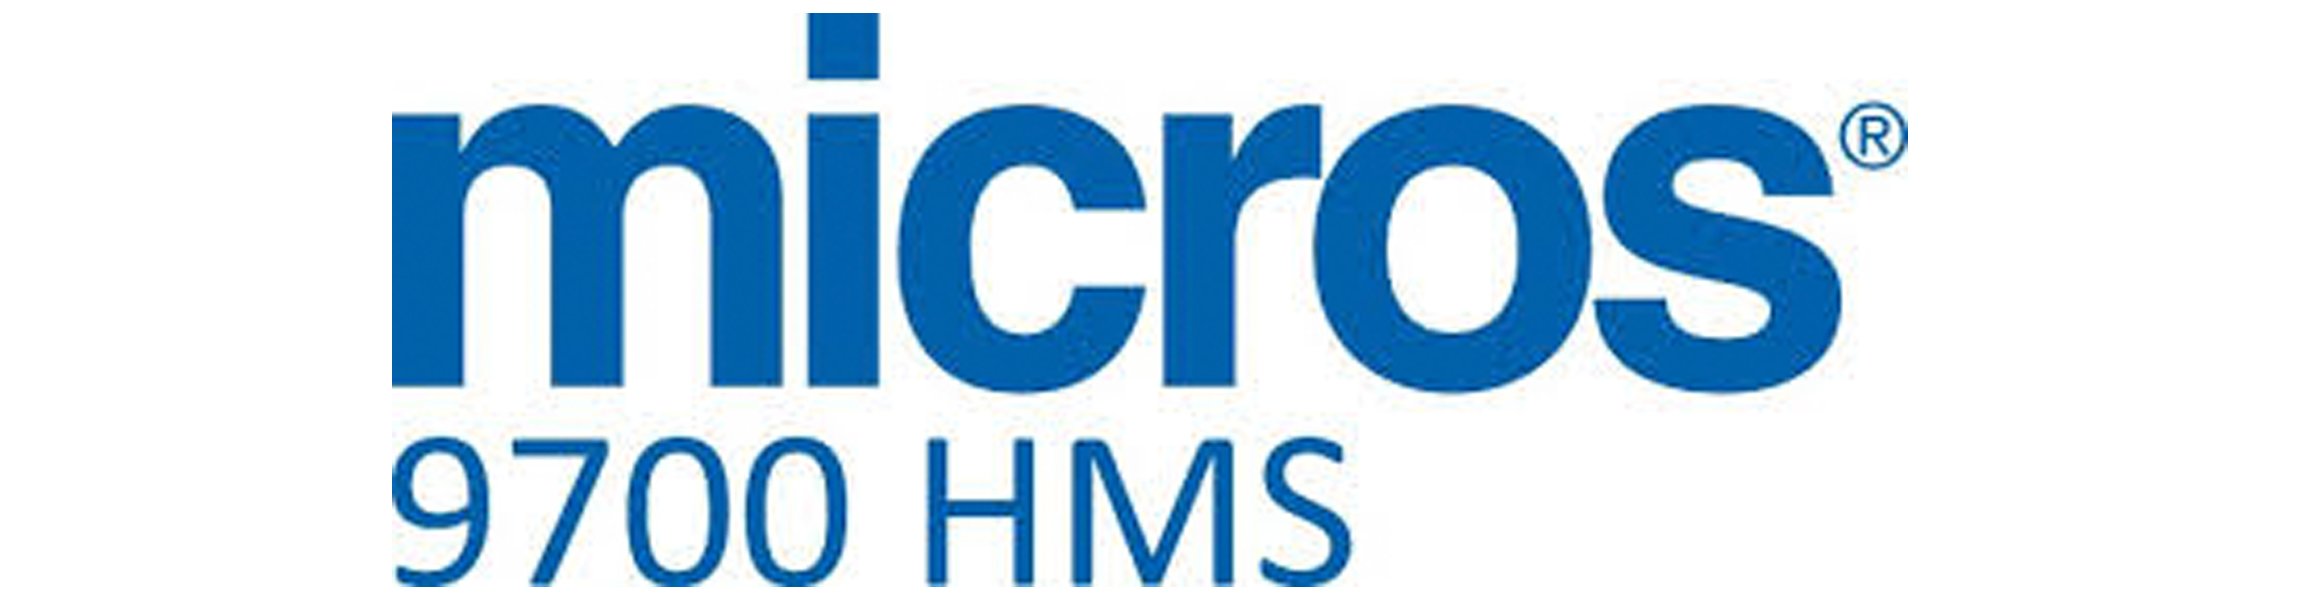 Micros-9700-HMS